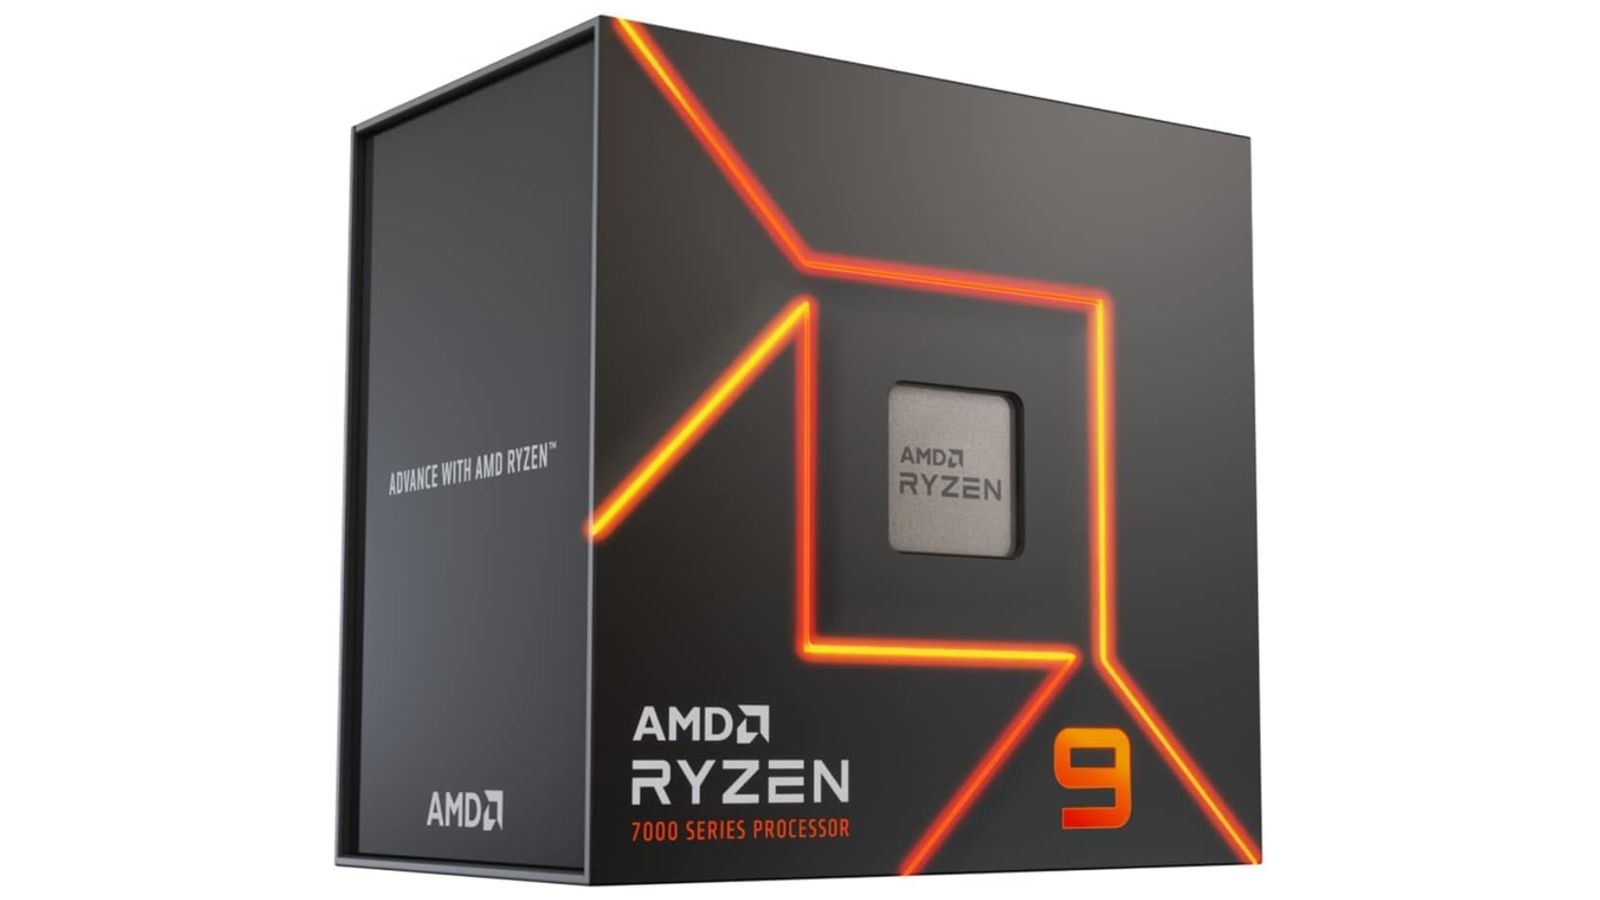 AMD Ryzen 9 7900X product image of a grey box featuring AMD Ryzen branding and orange details.